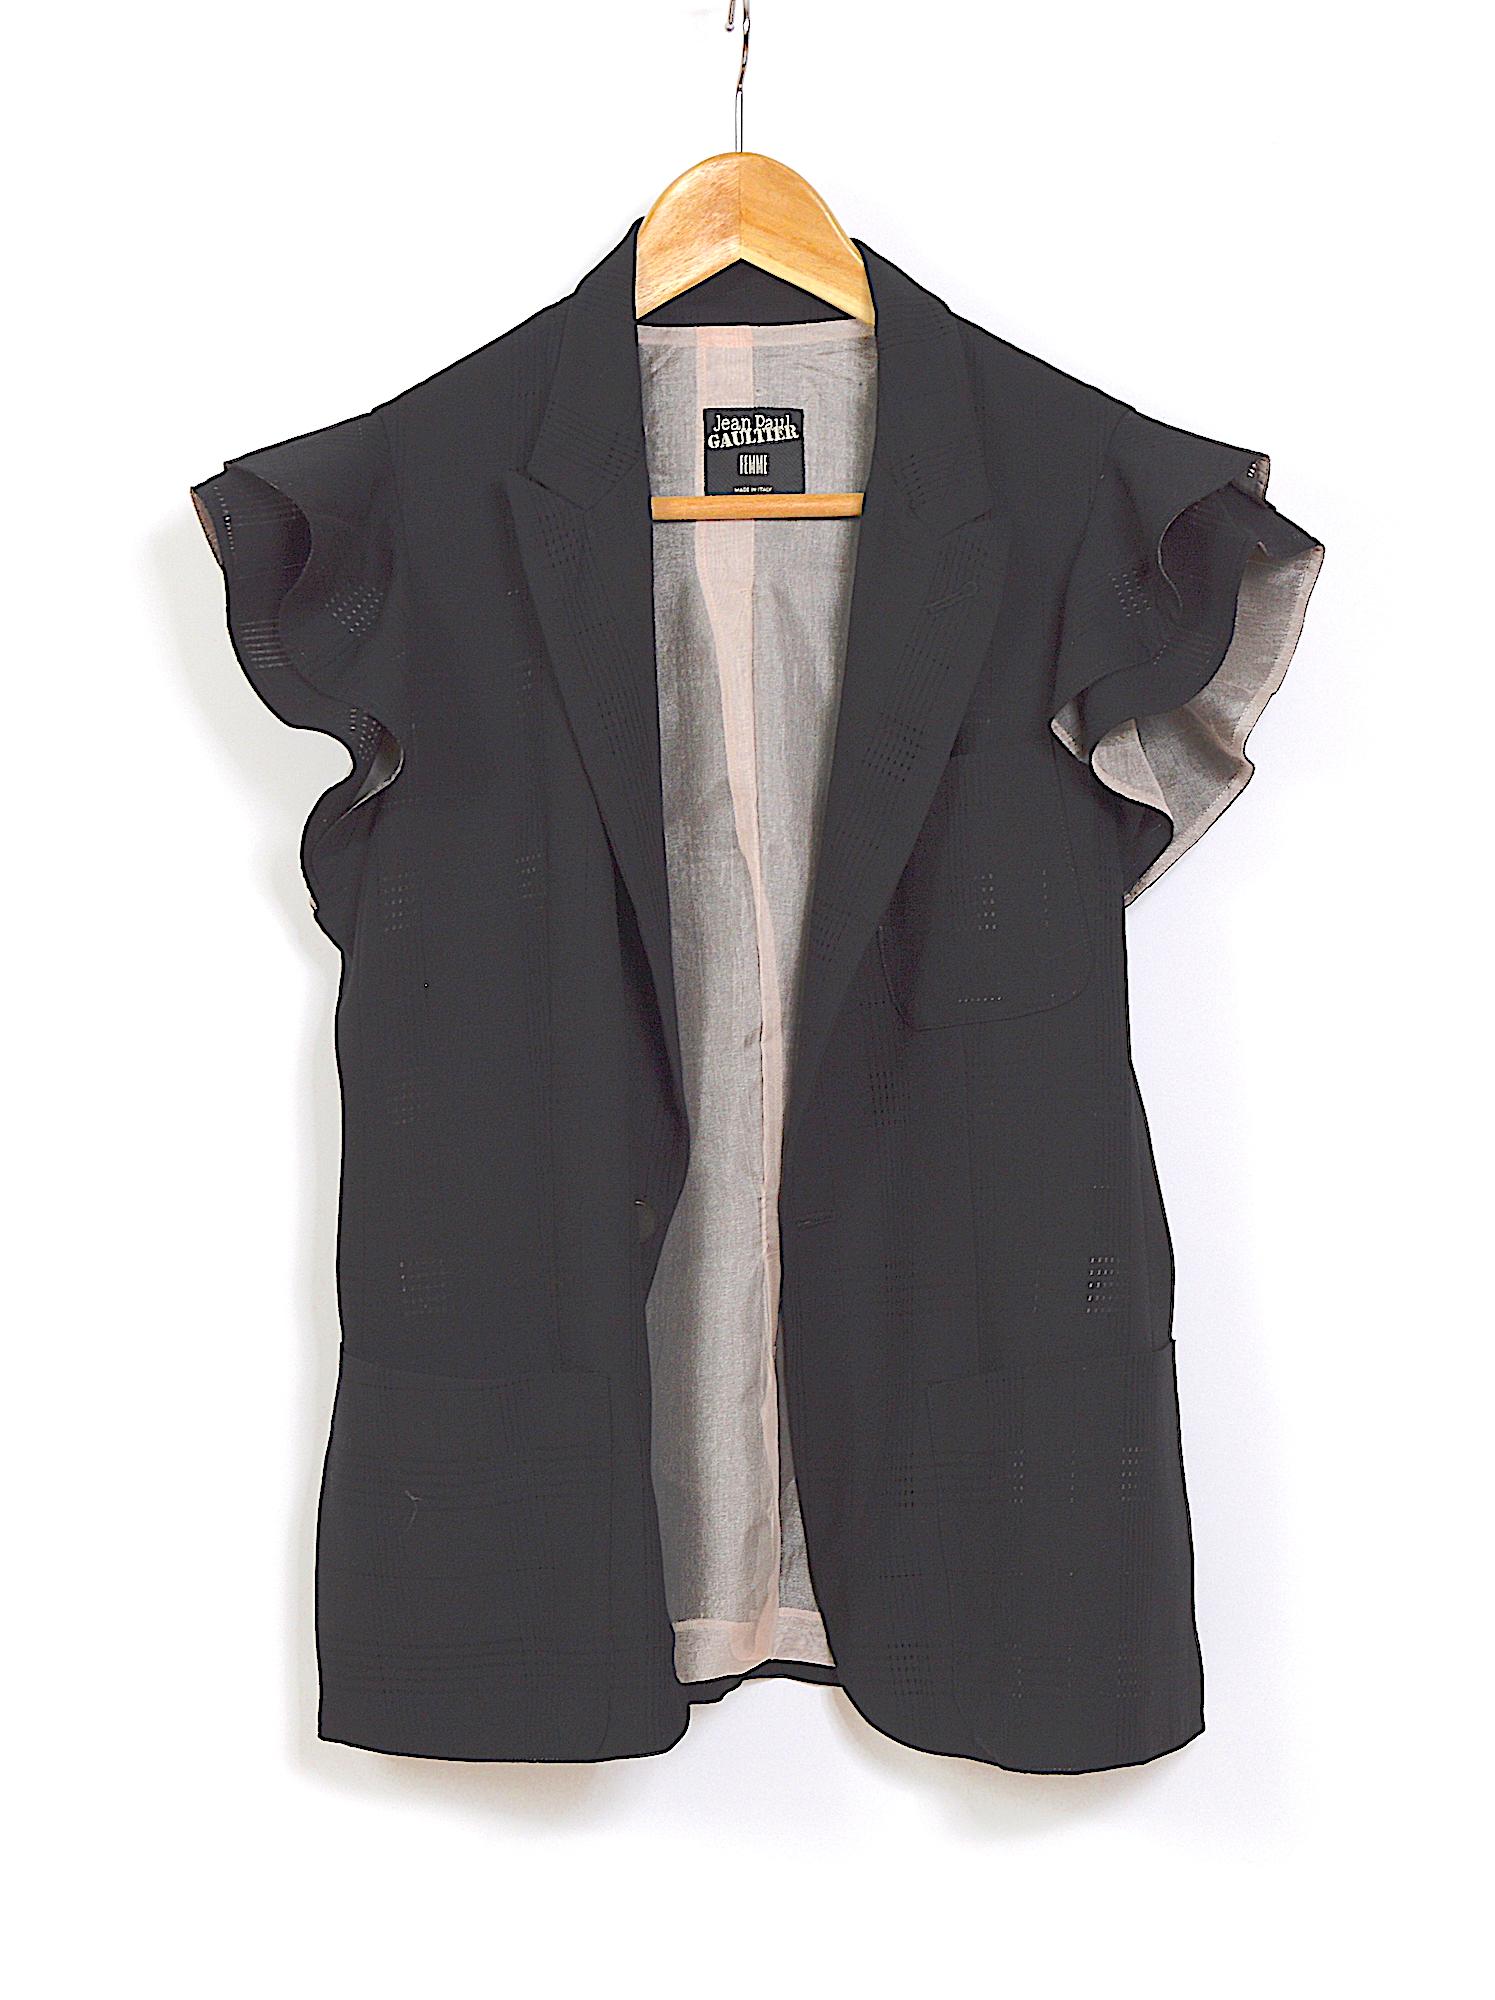 Black Jean Paul Gaultier 1990s vintage black jacket featuring short ruffle sleeves